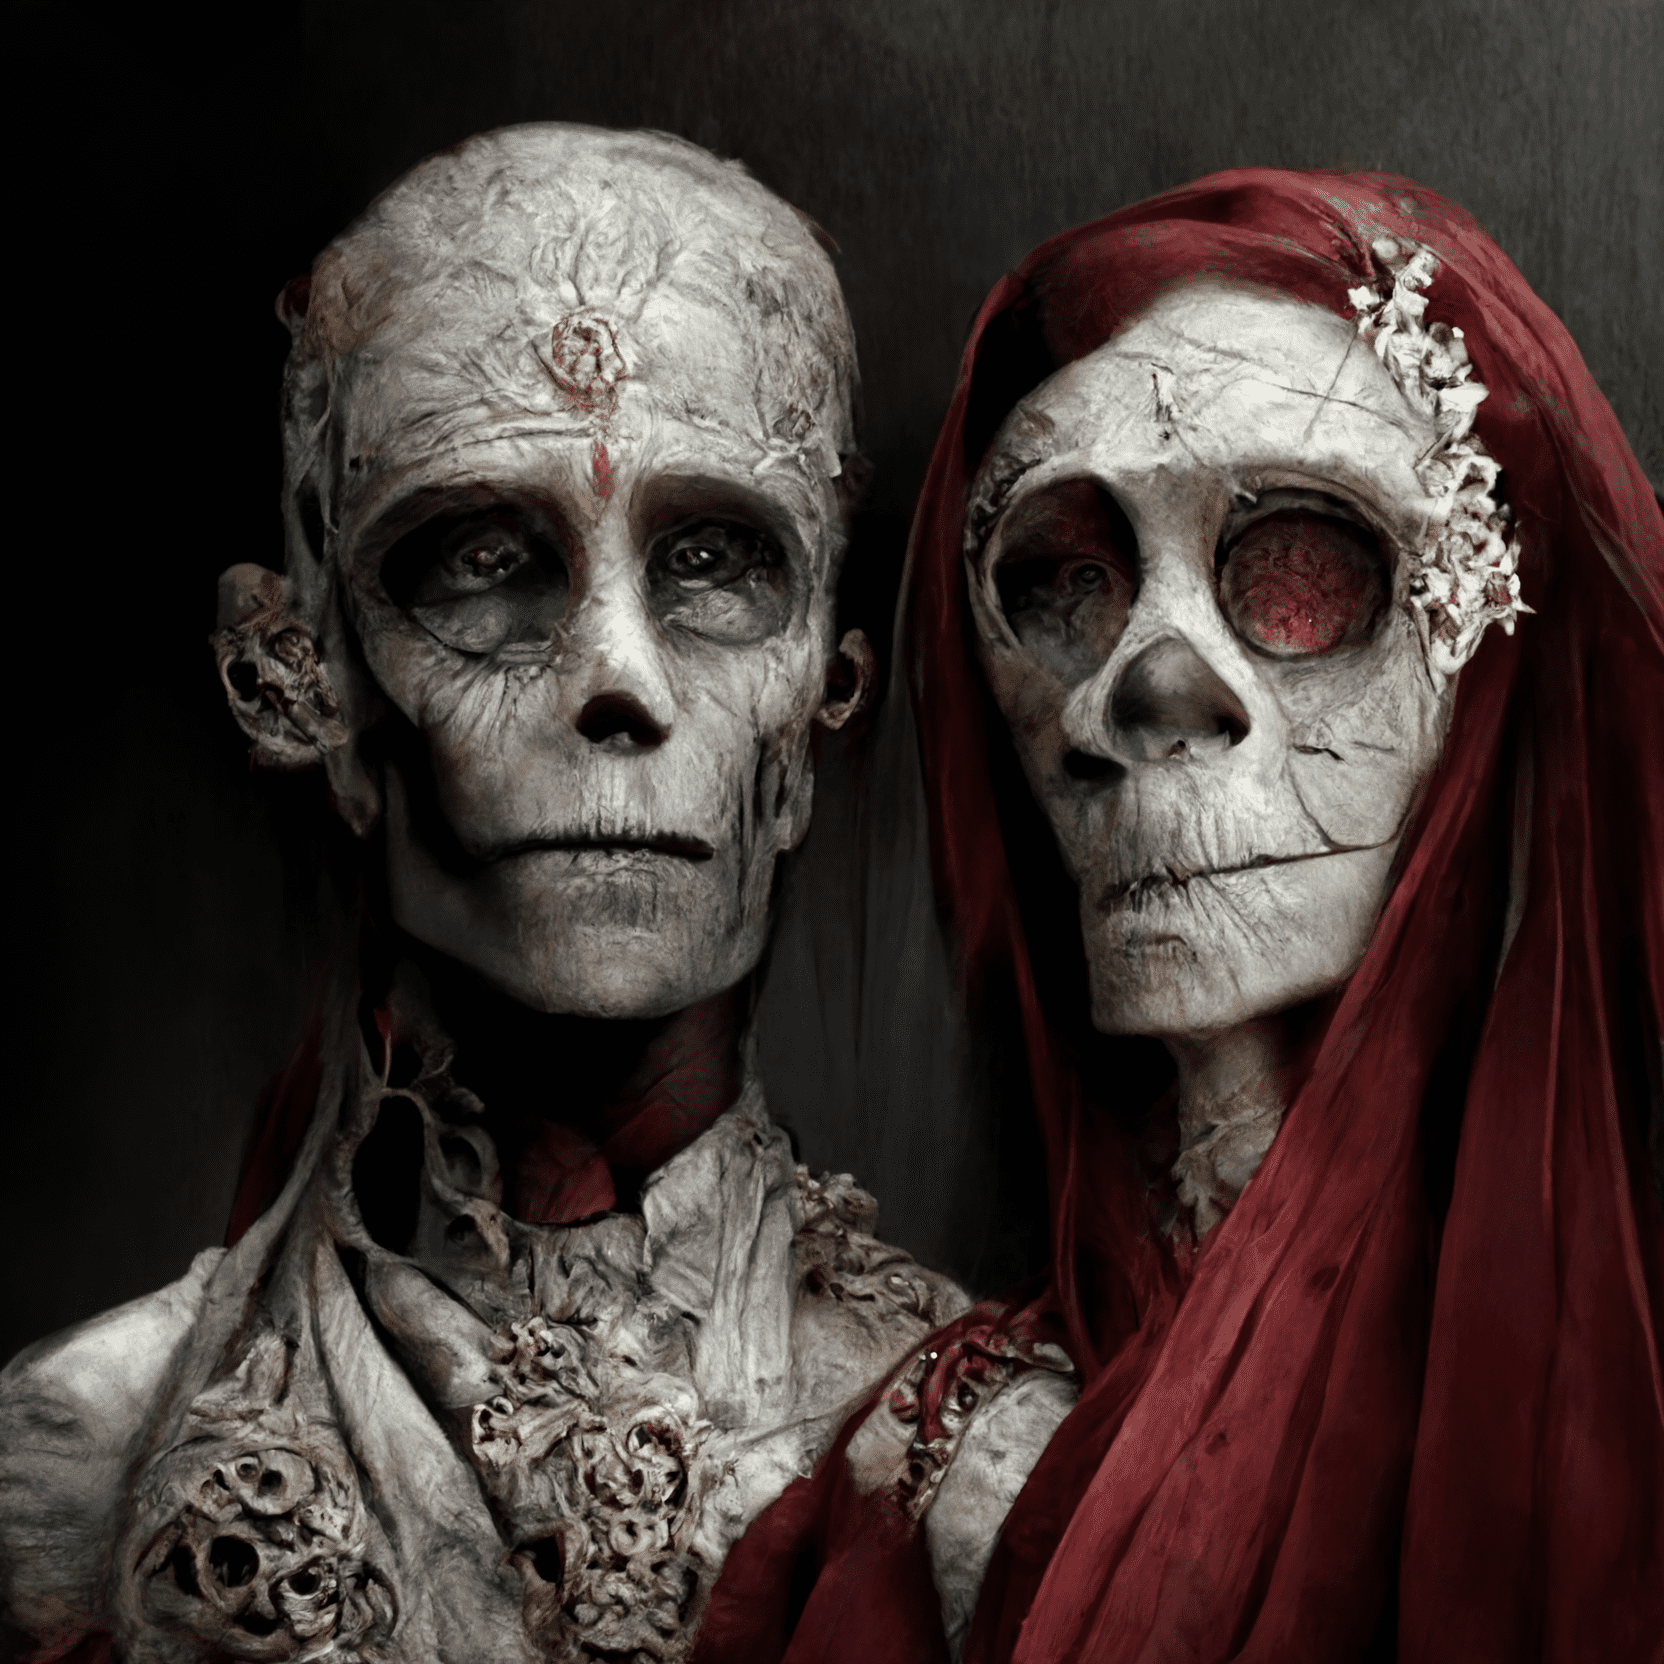 skeleton wedding in red